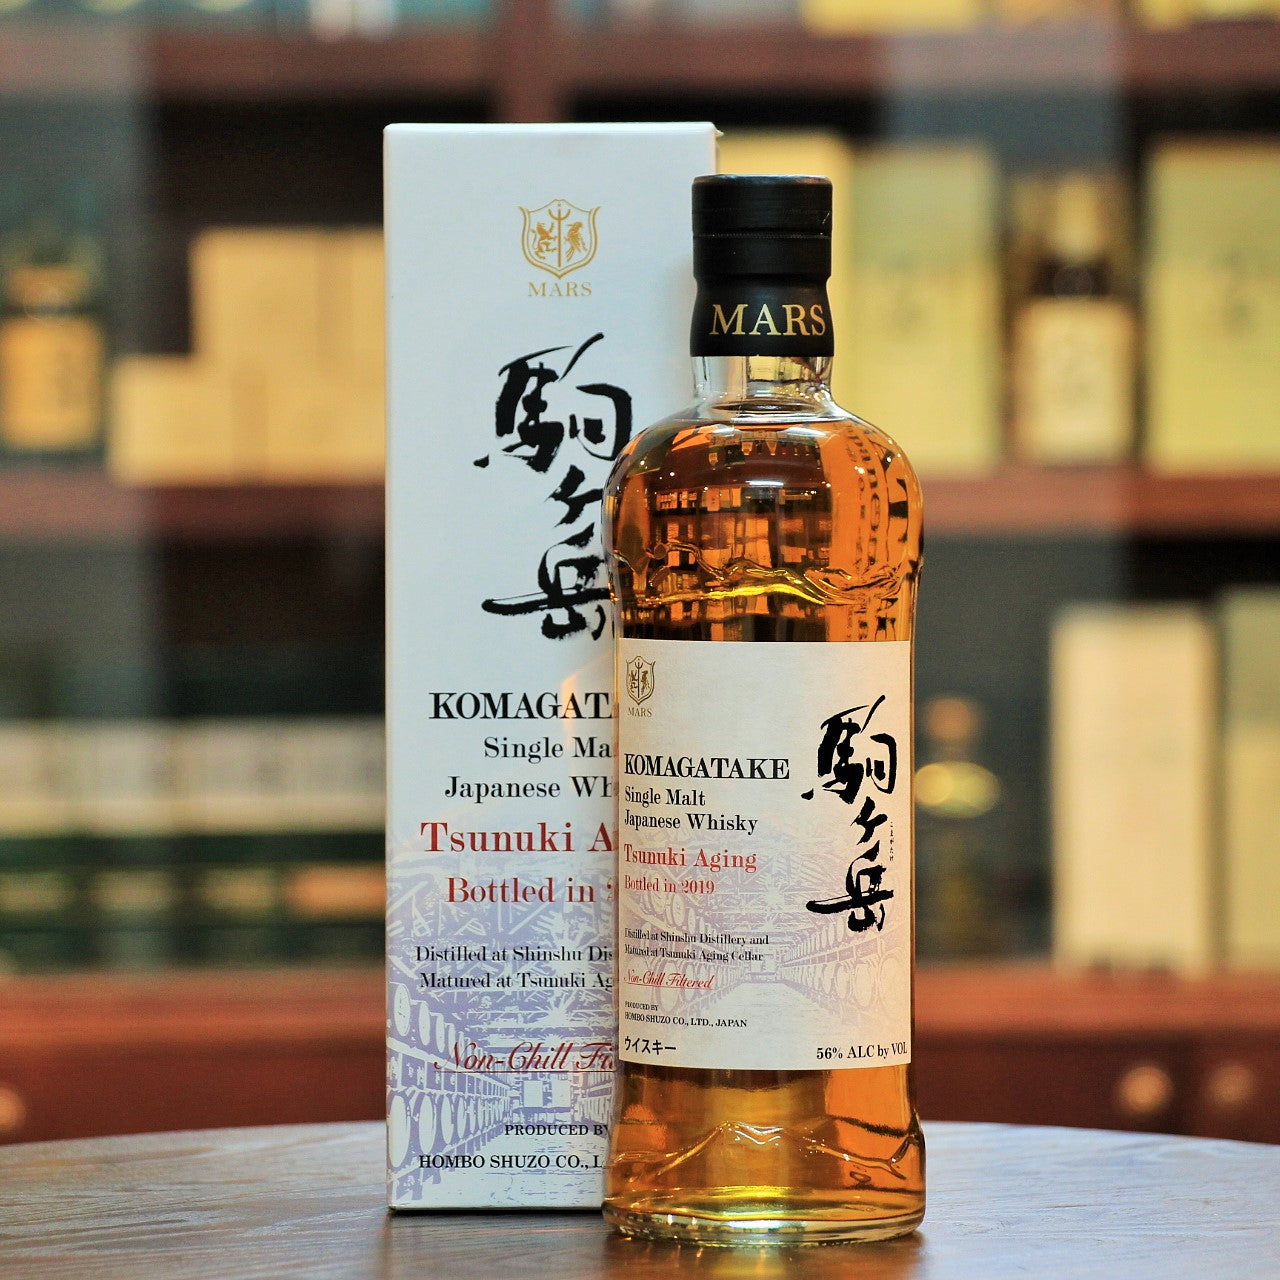 Komagatake Single Malt Japanese Whisky (Tsunuki Aging 2019)